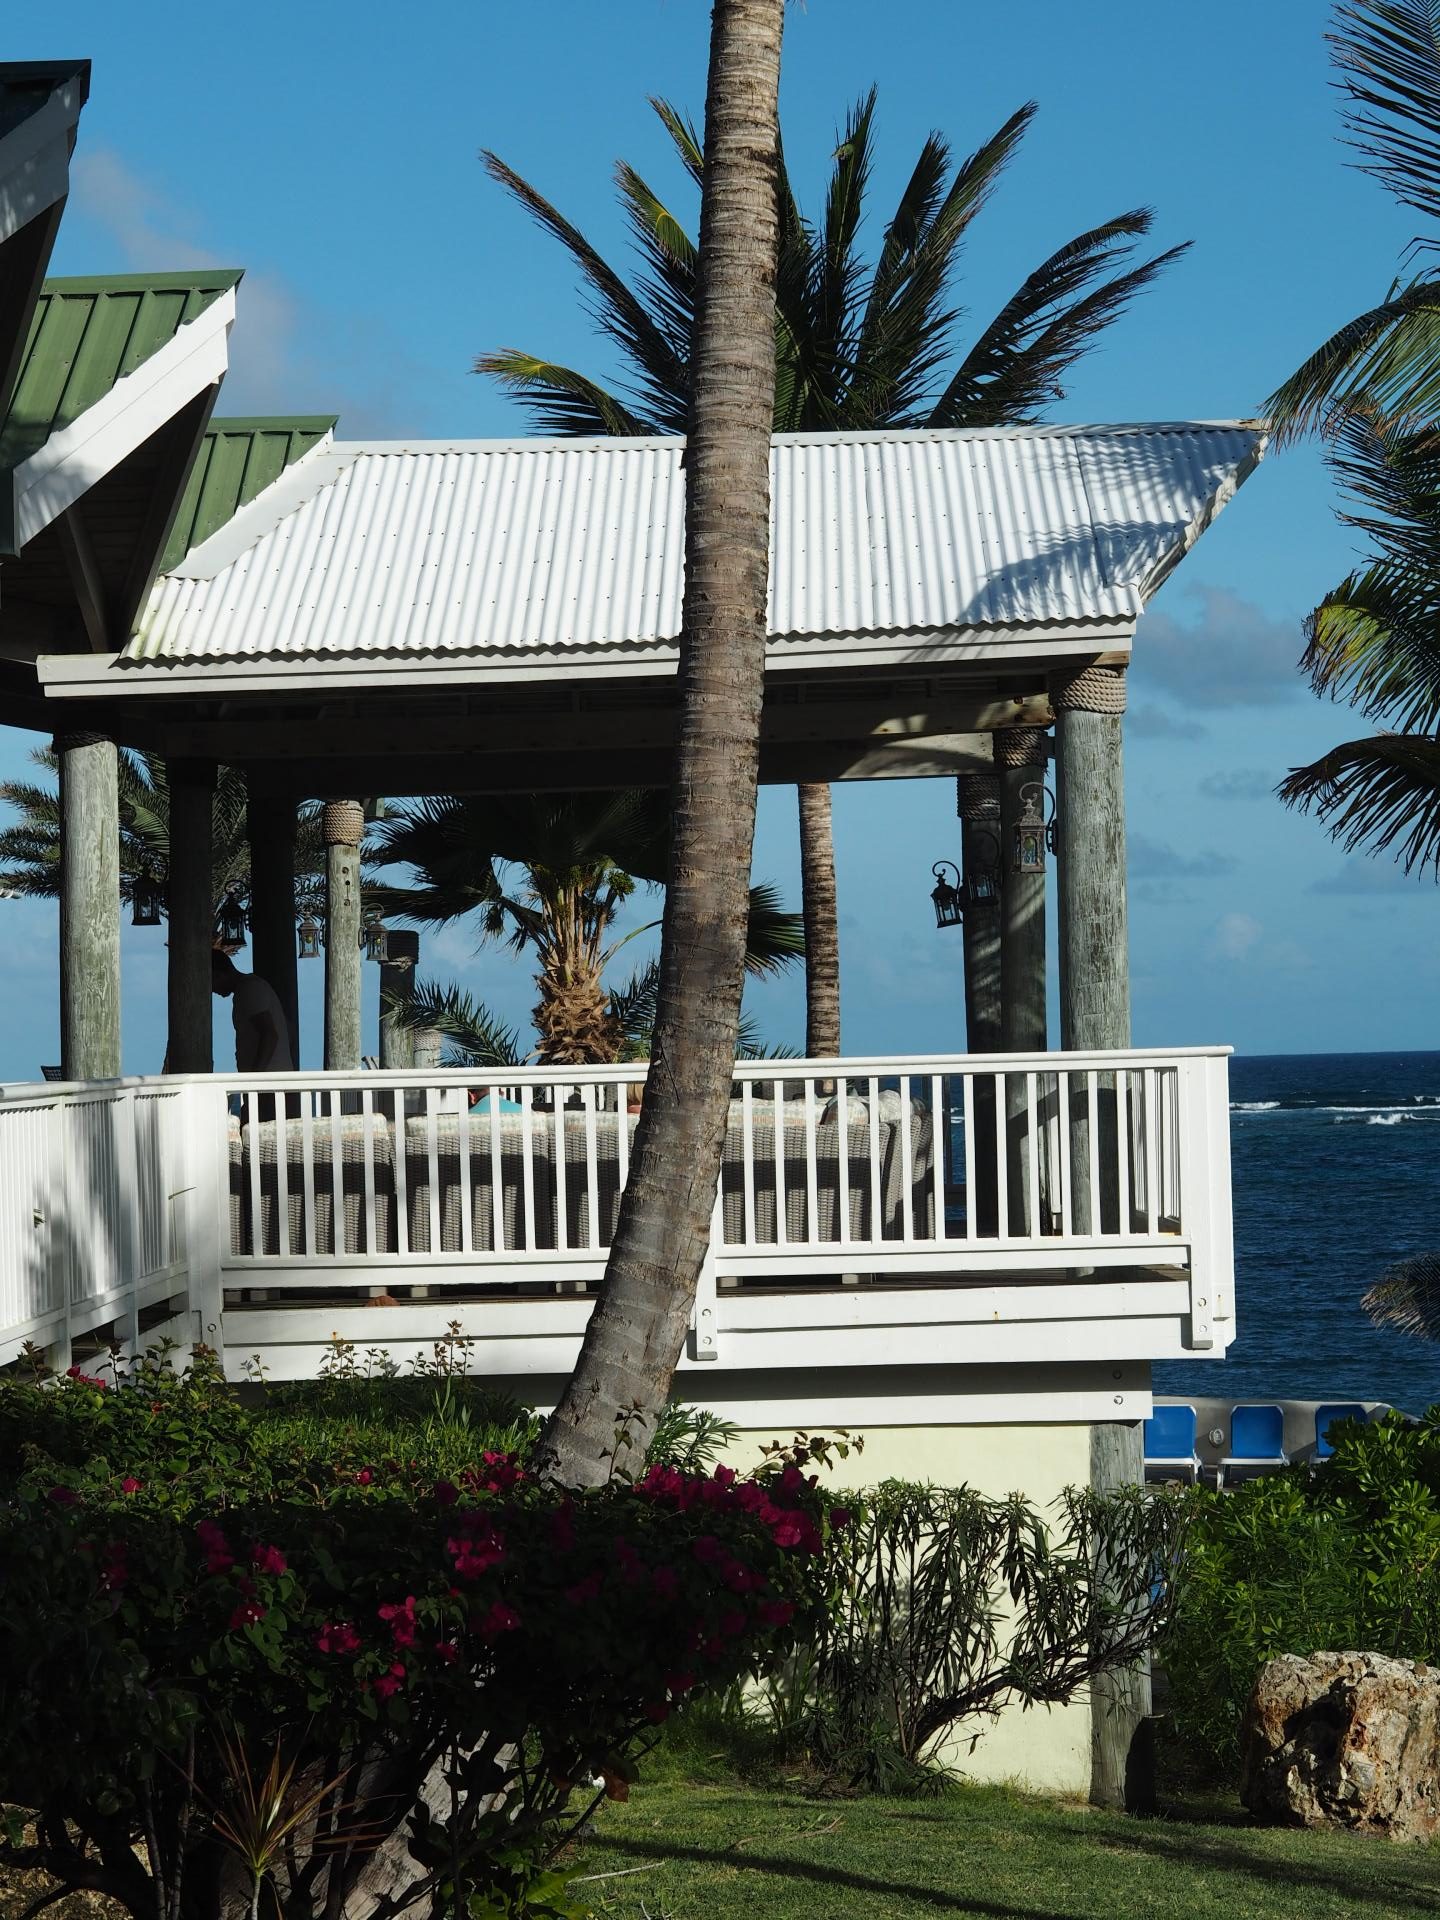 St. James Club Resort & Villas - Antigua - Coco Beach